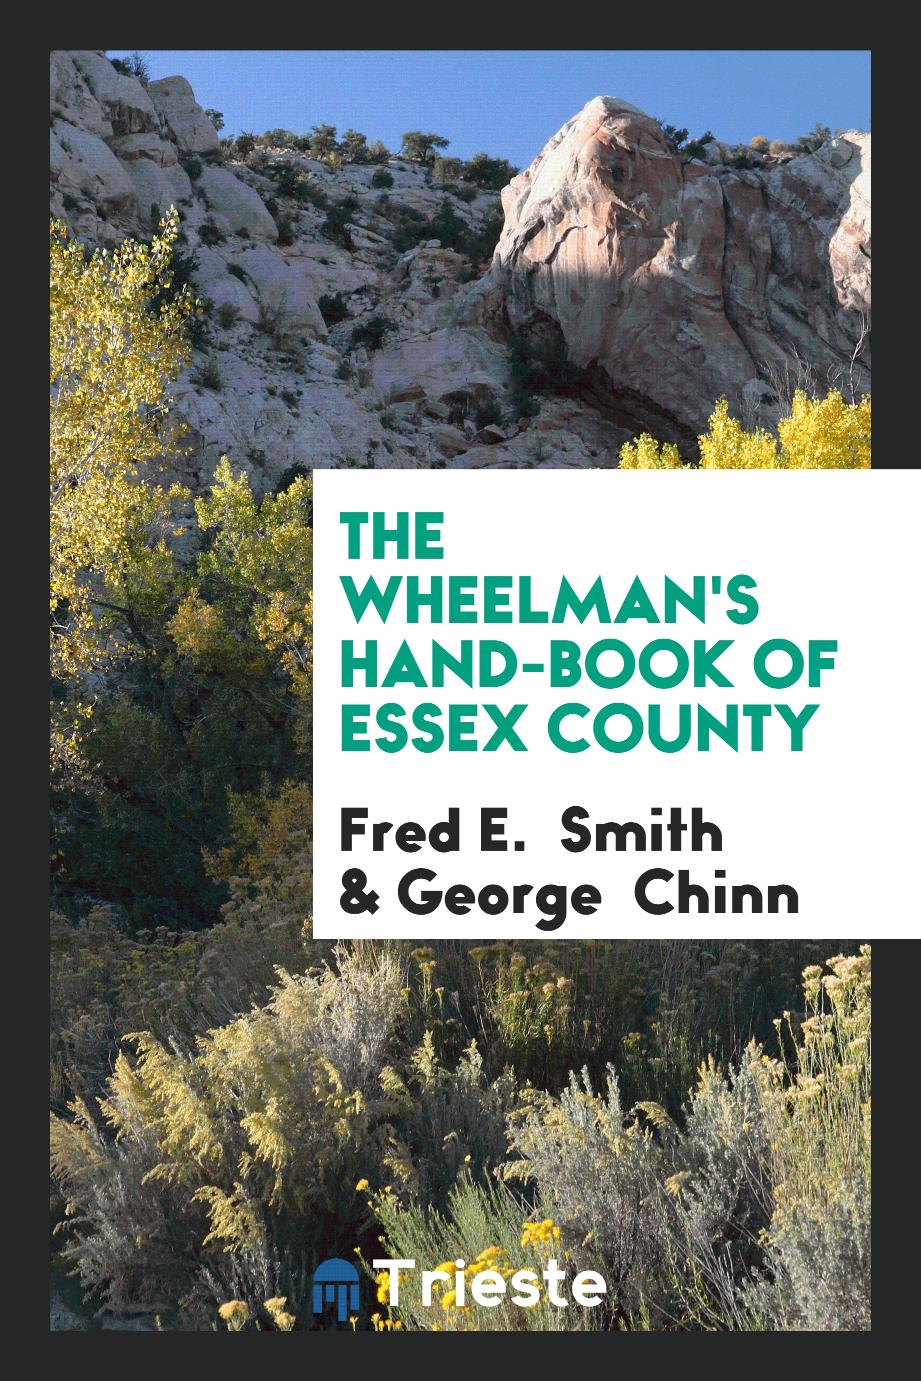 The Wheelman's Hand-book of Essex County